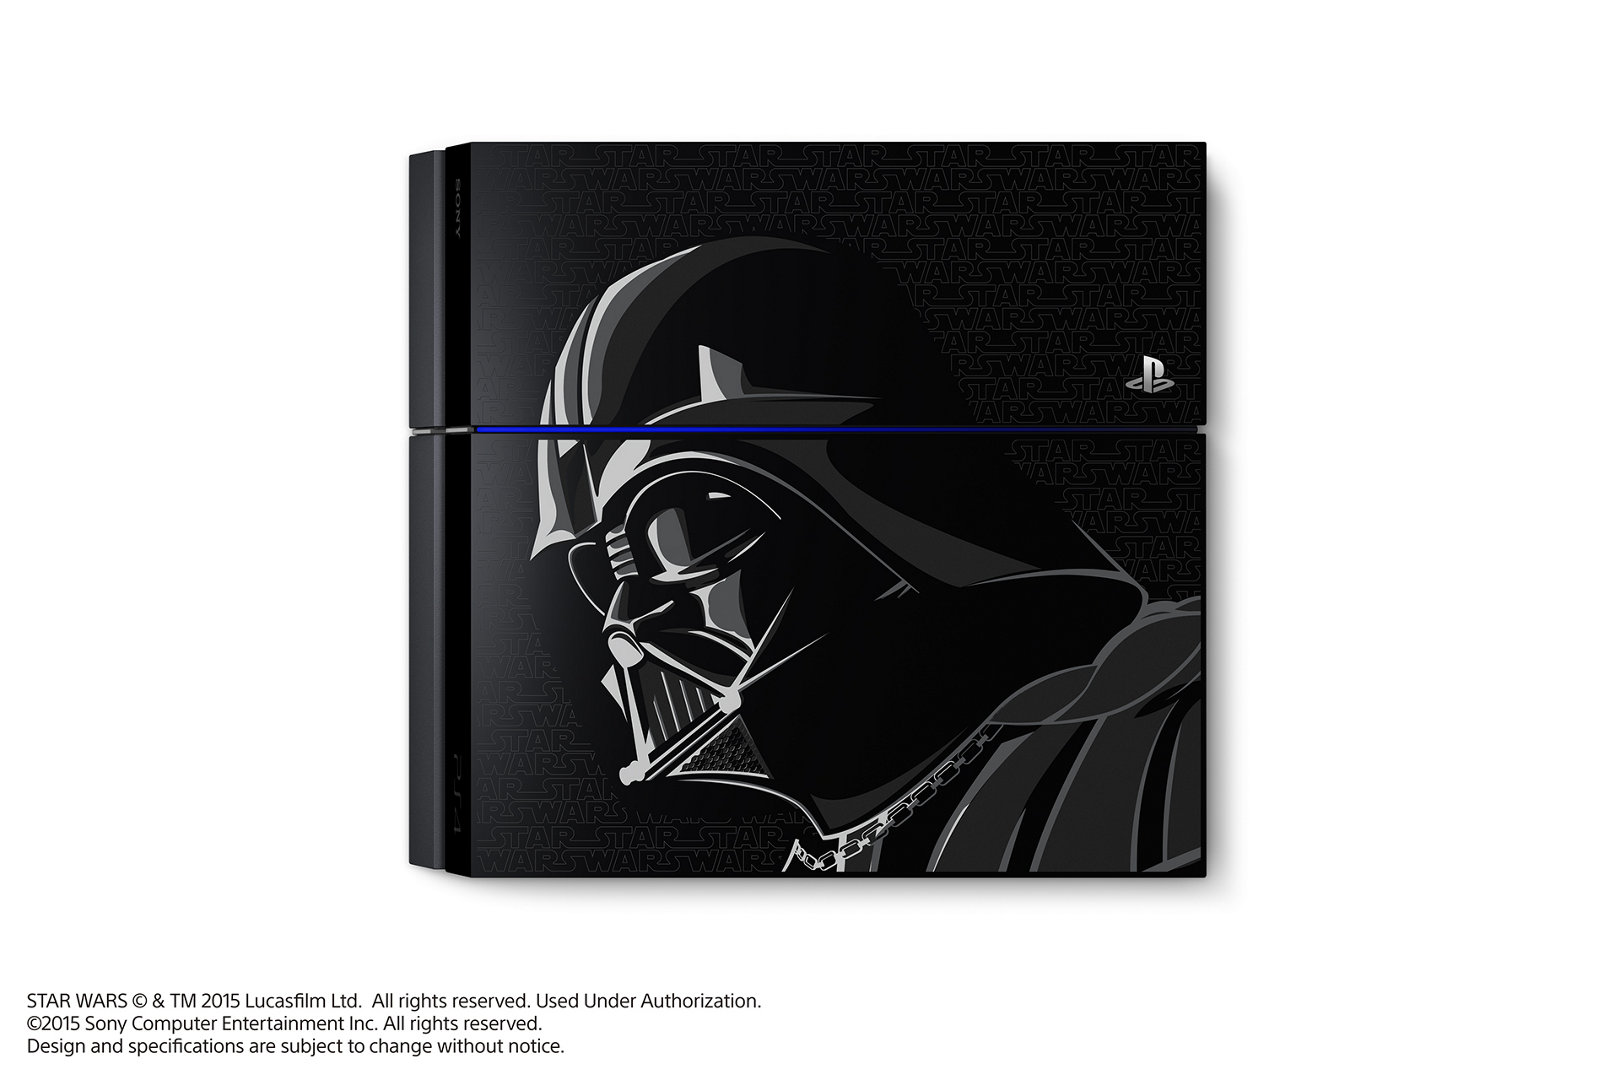 Vader-Themed Star Wars Battlefront PS4 Costs $450 -